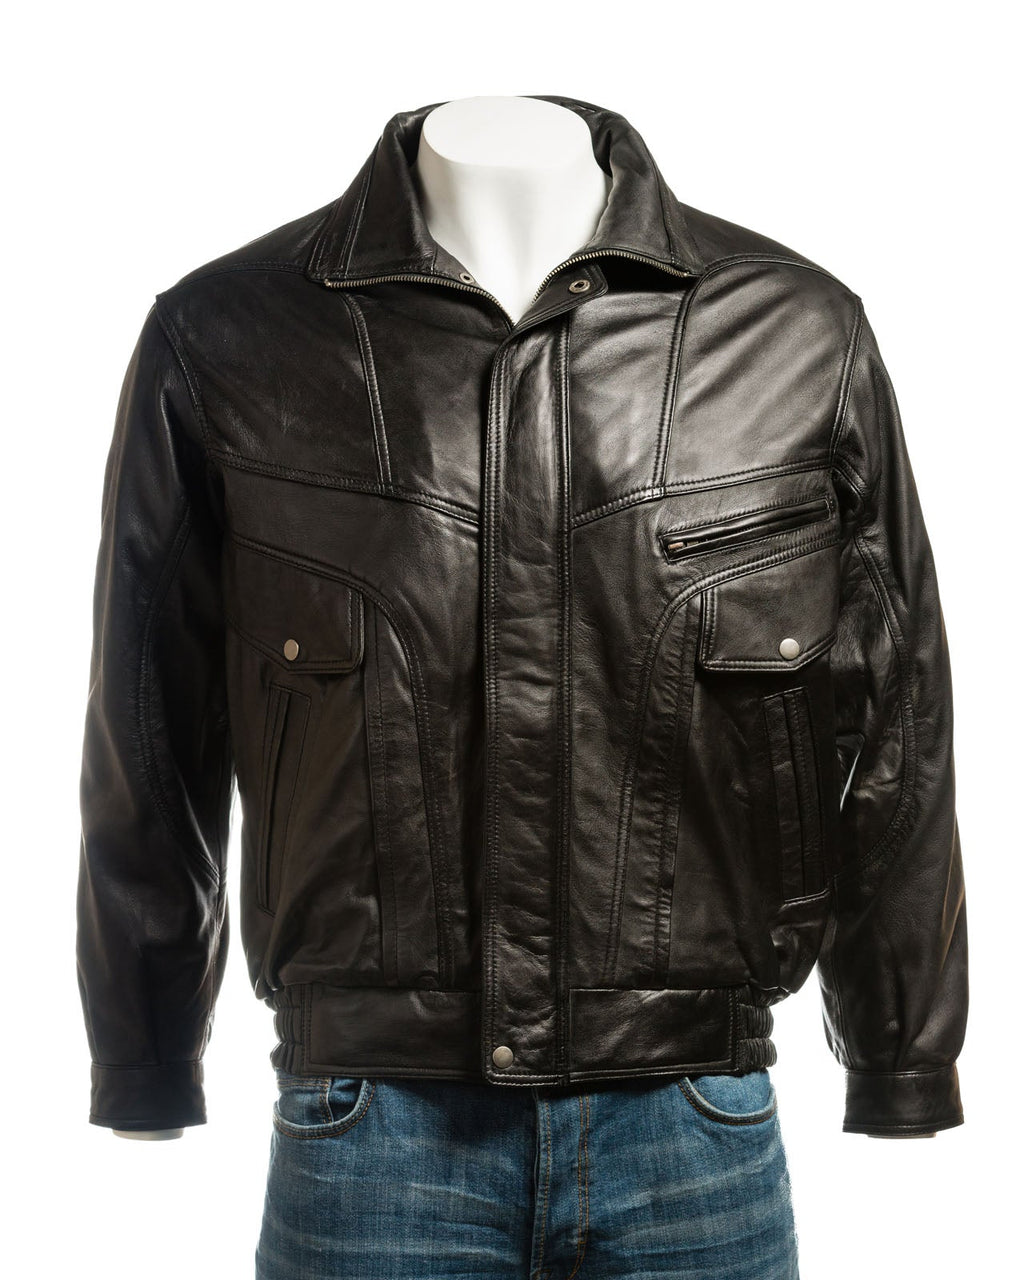 Men's Black Pocket Detail Blouson Style Leather Jacket: Marco